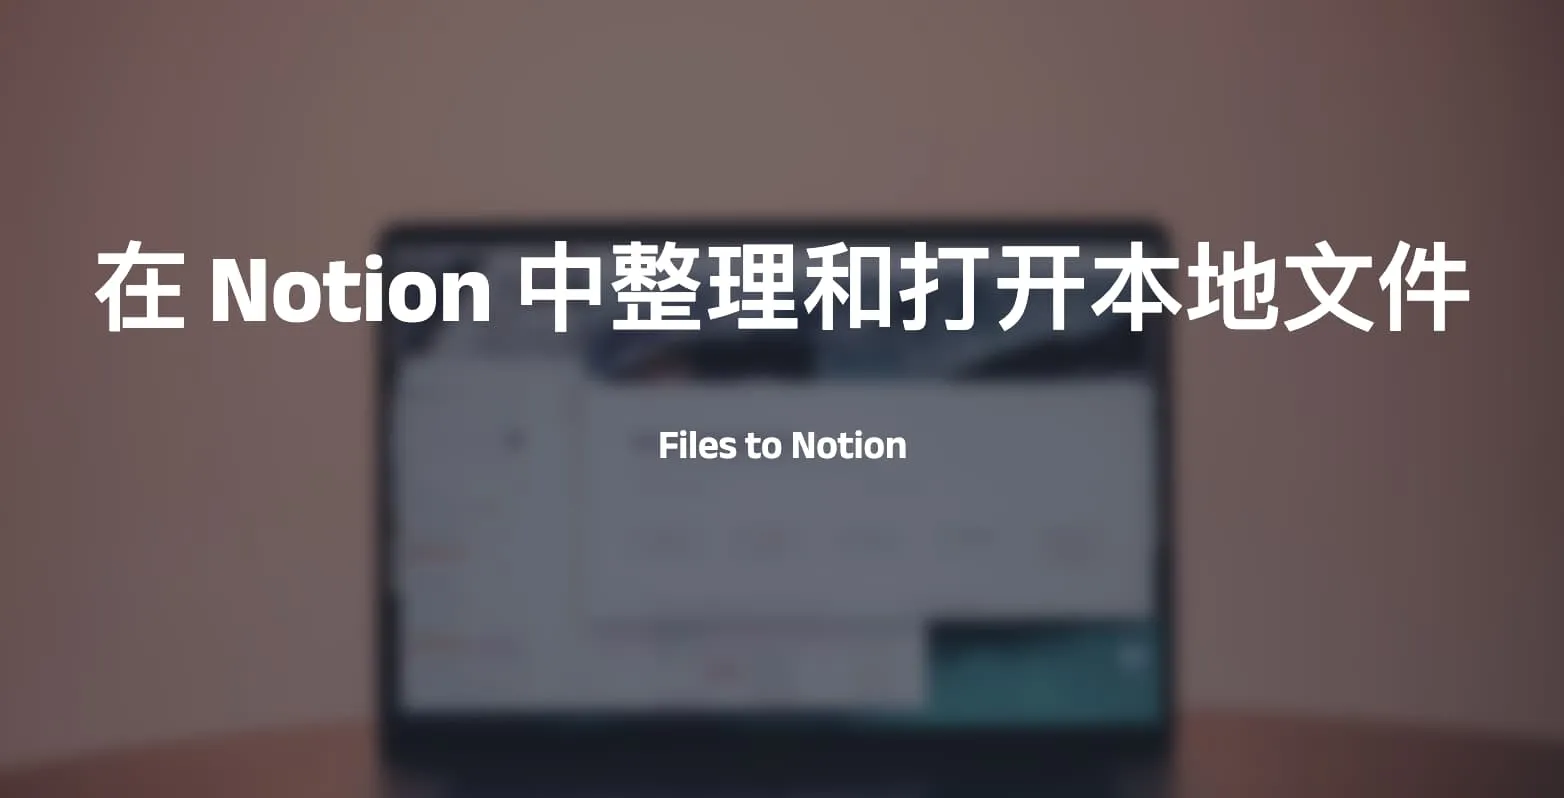 Files to Notion-在Notion中整理和打开本地文件